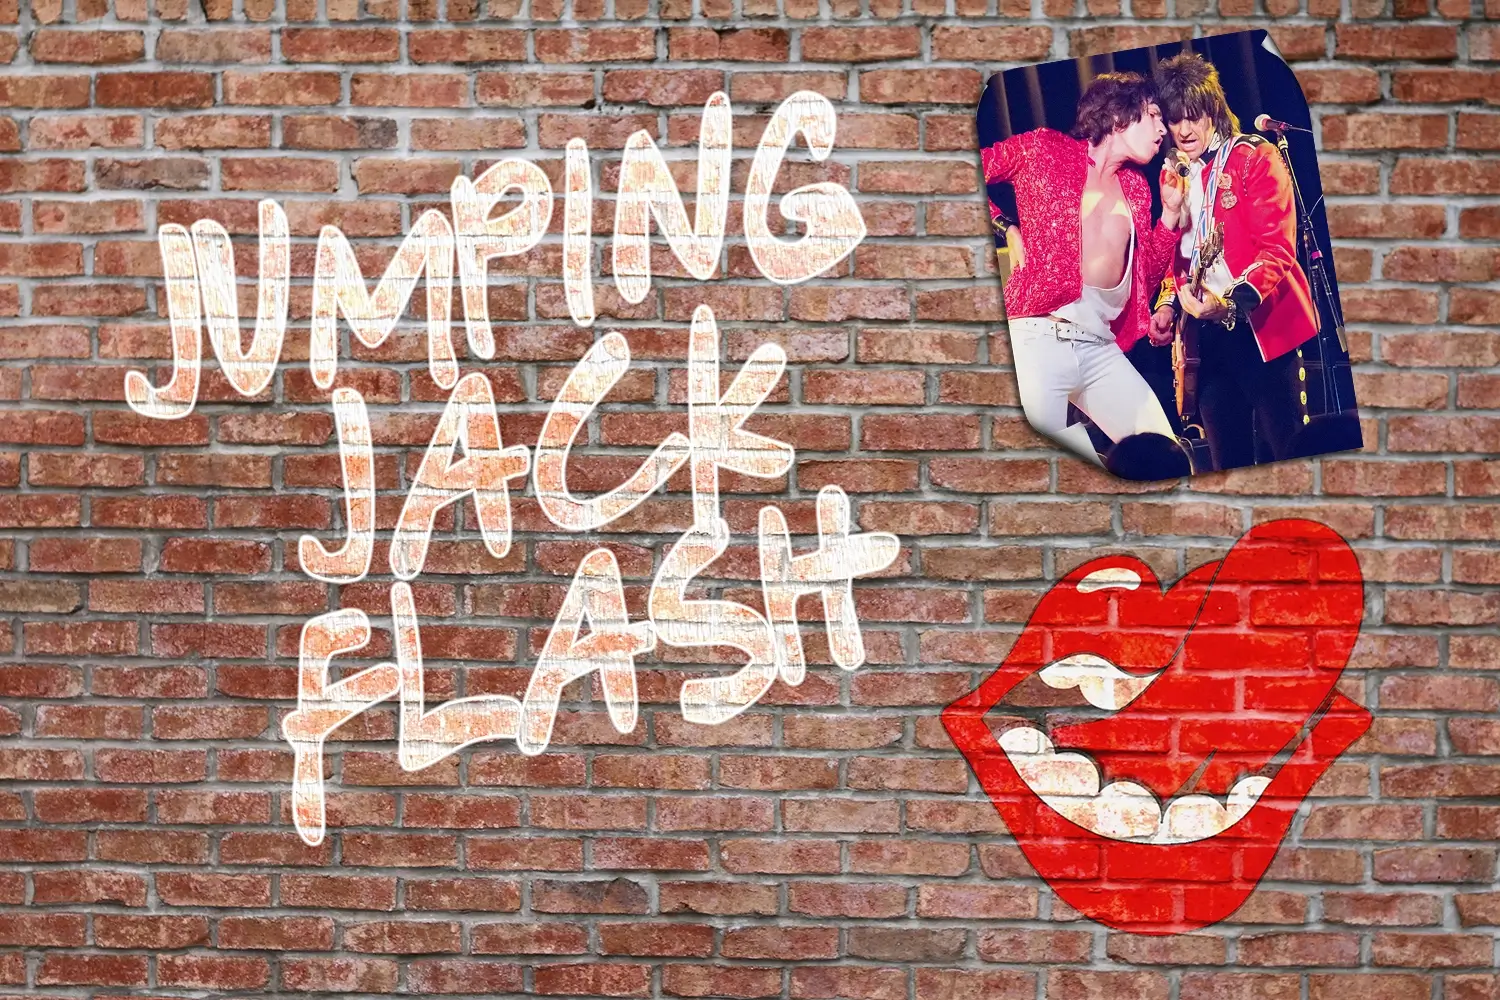 Jumping Jack Flash graffiti banner